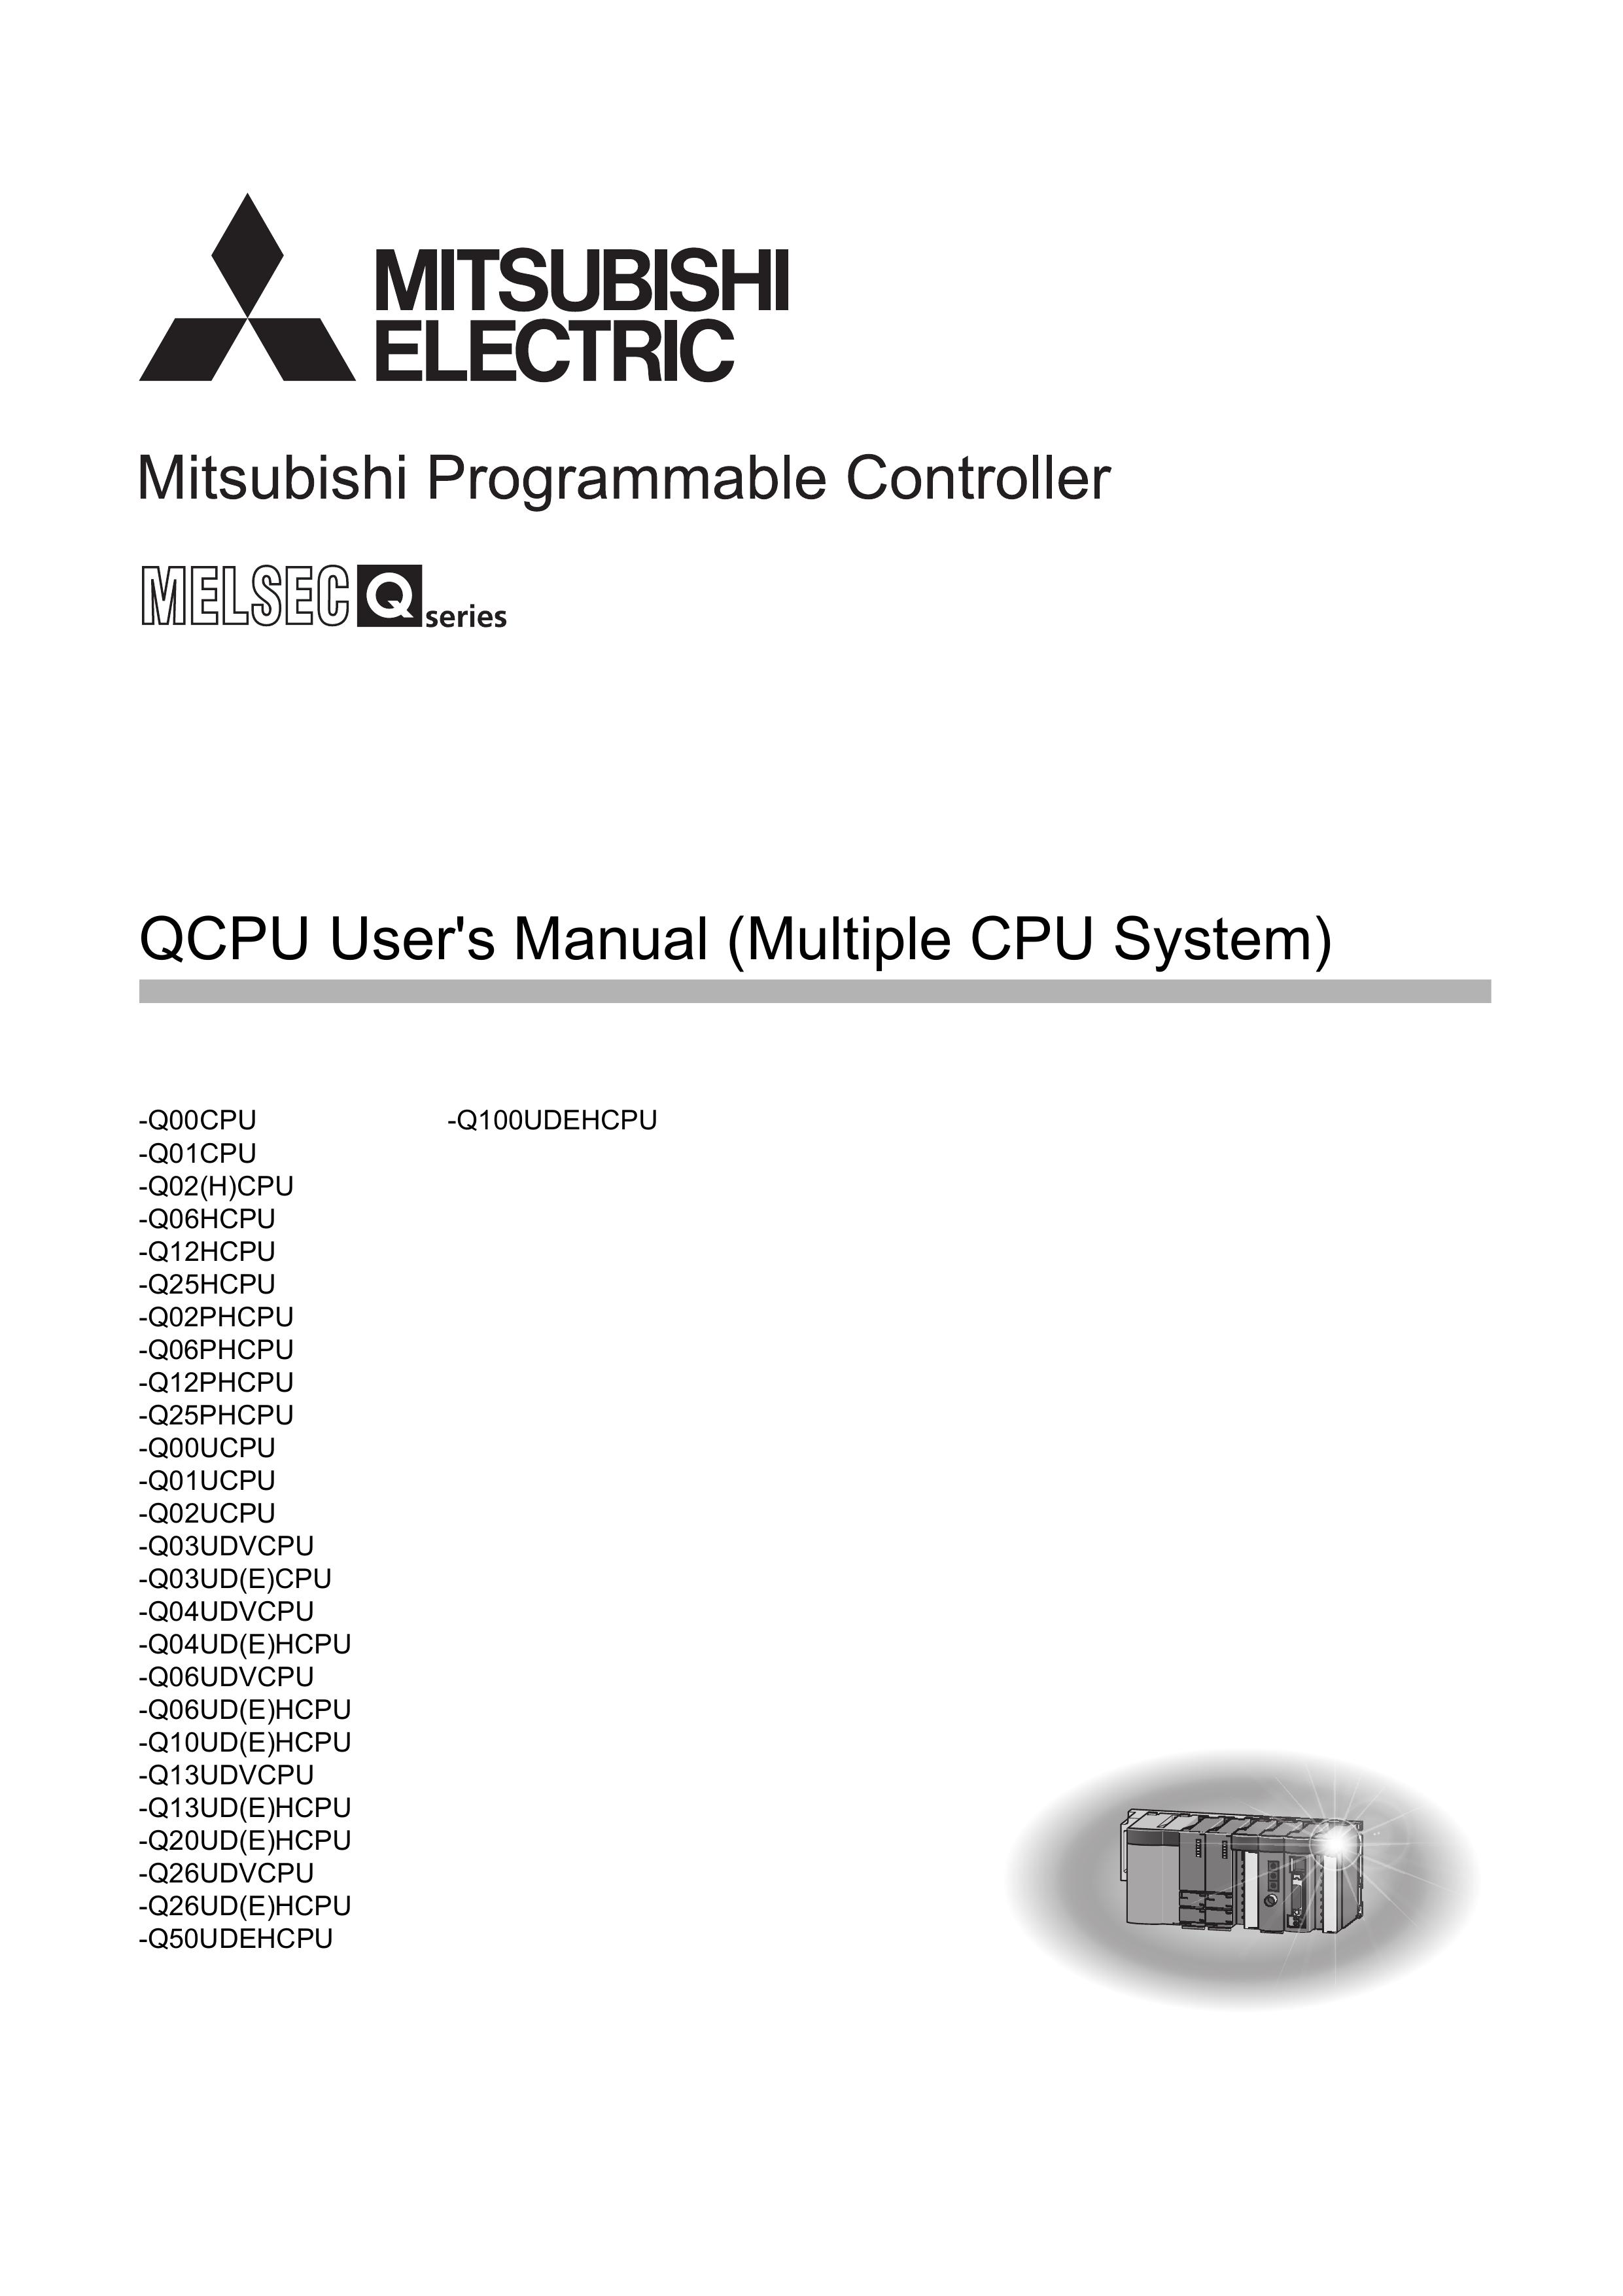 Mitsubishi Electronics Q03UD(E)CPU Sleep Apnea Machine User Manual